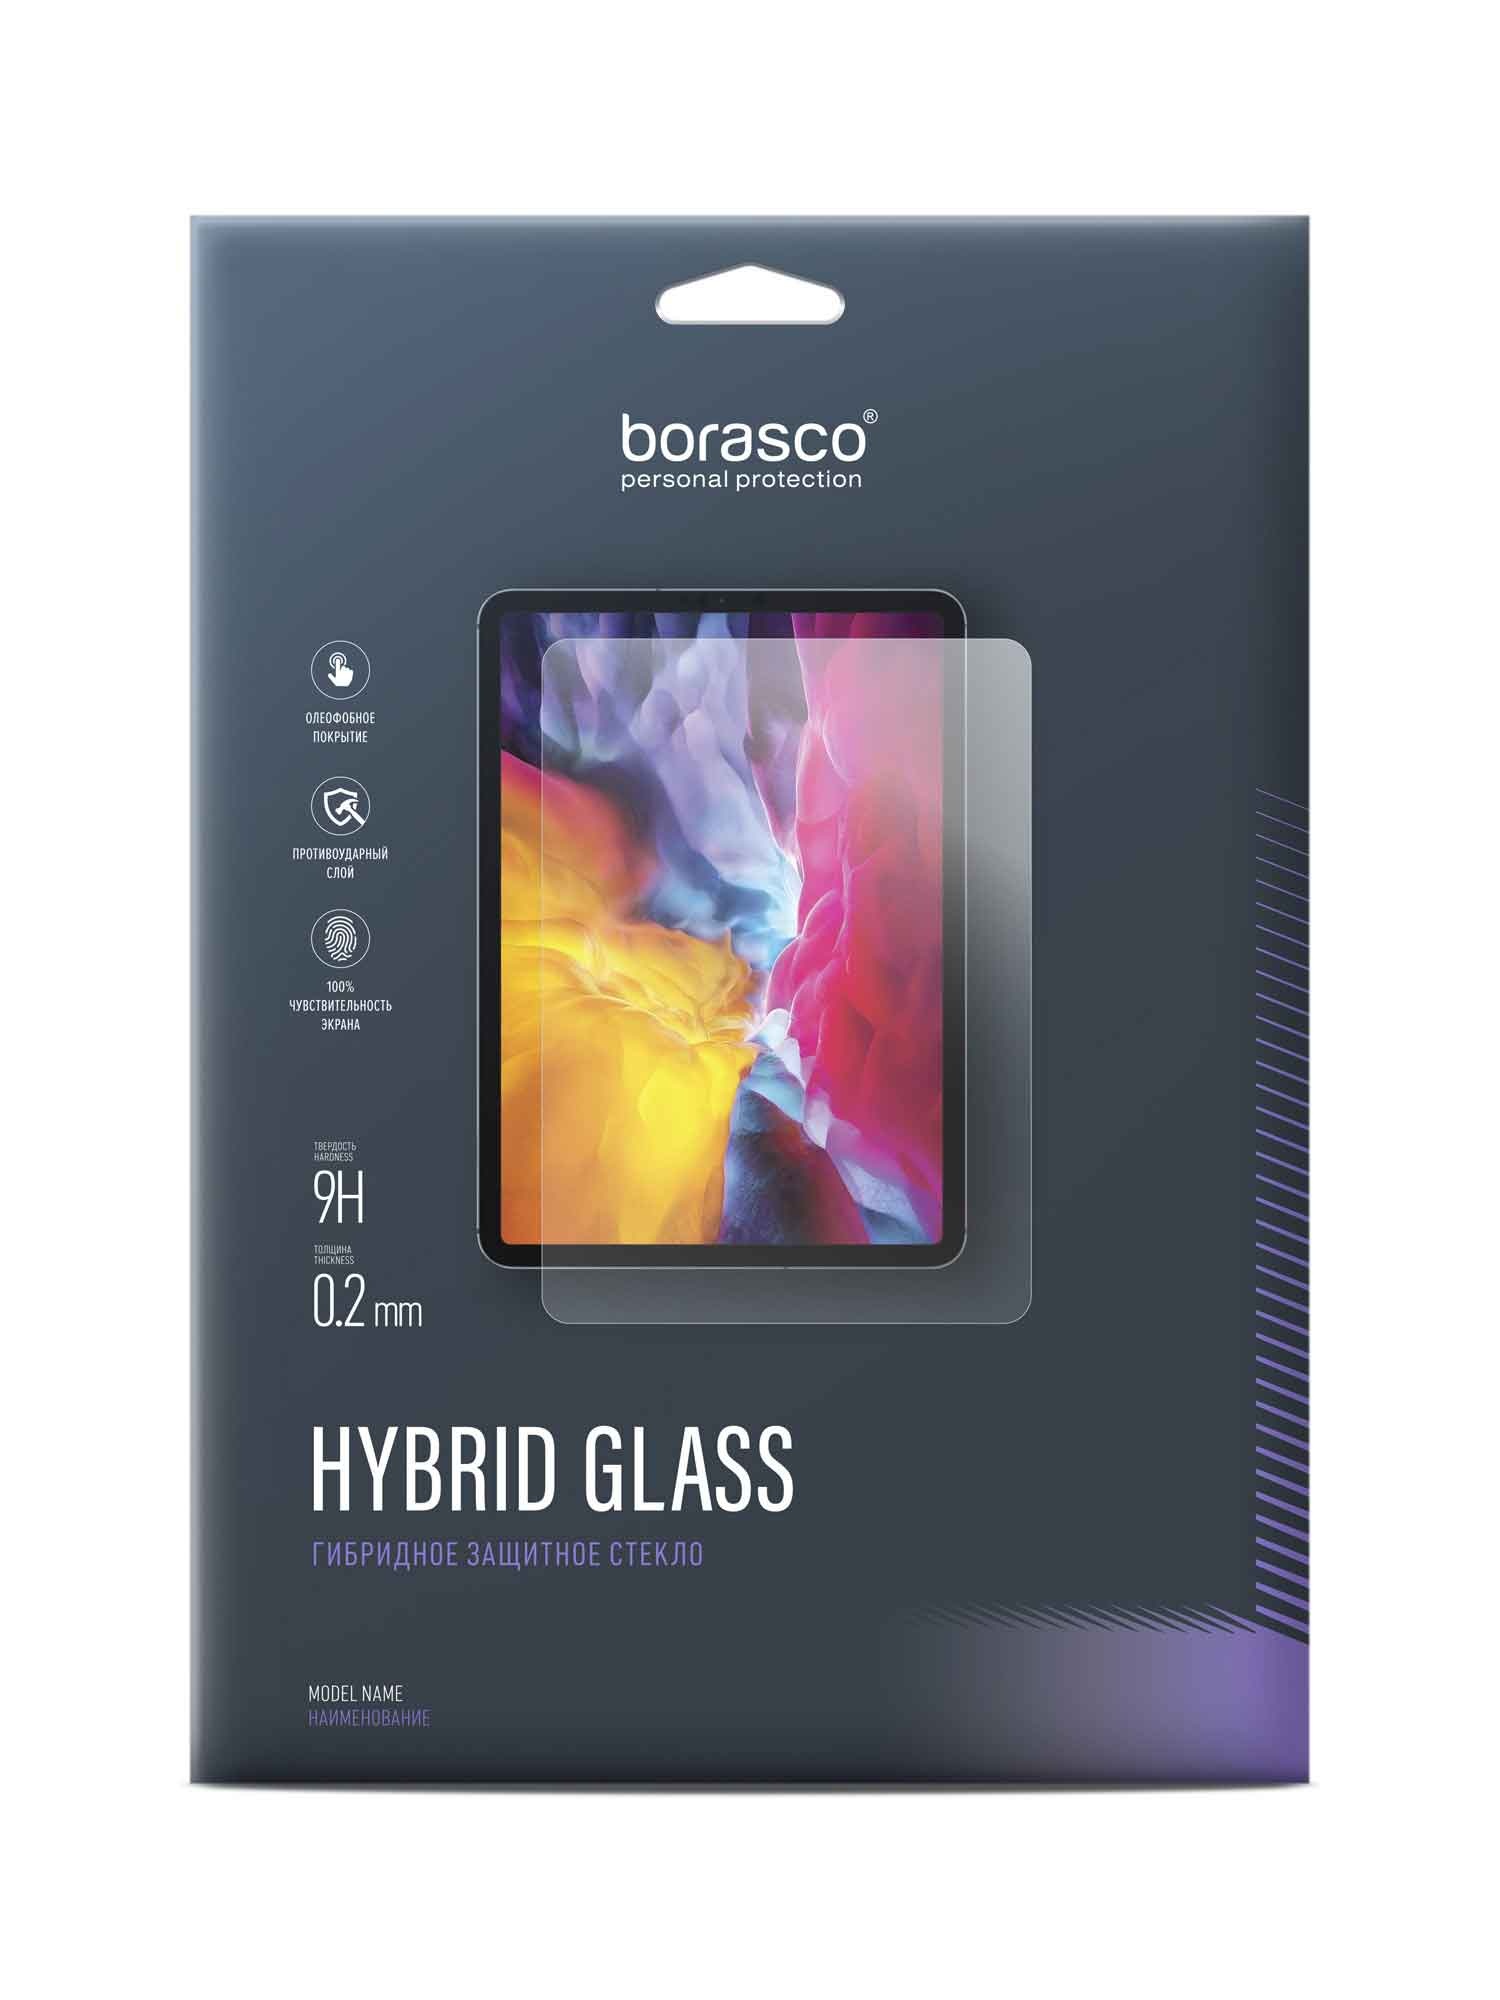 Защитное стекло BoraSCO Hybrid Glass для Prestigio Wize 3761 3G 10.1 стекло защитное borasco hybrid glass prestigio wize 1107 4g 7 прозрачное